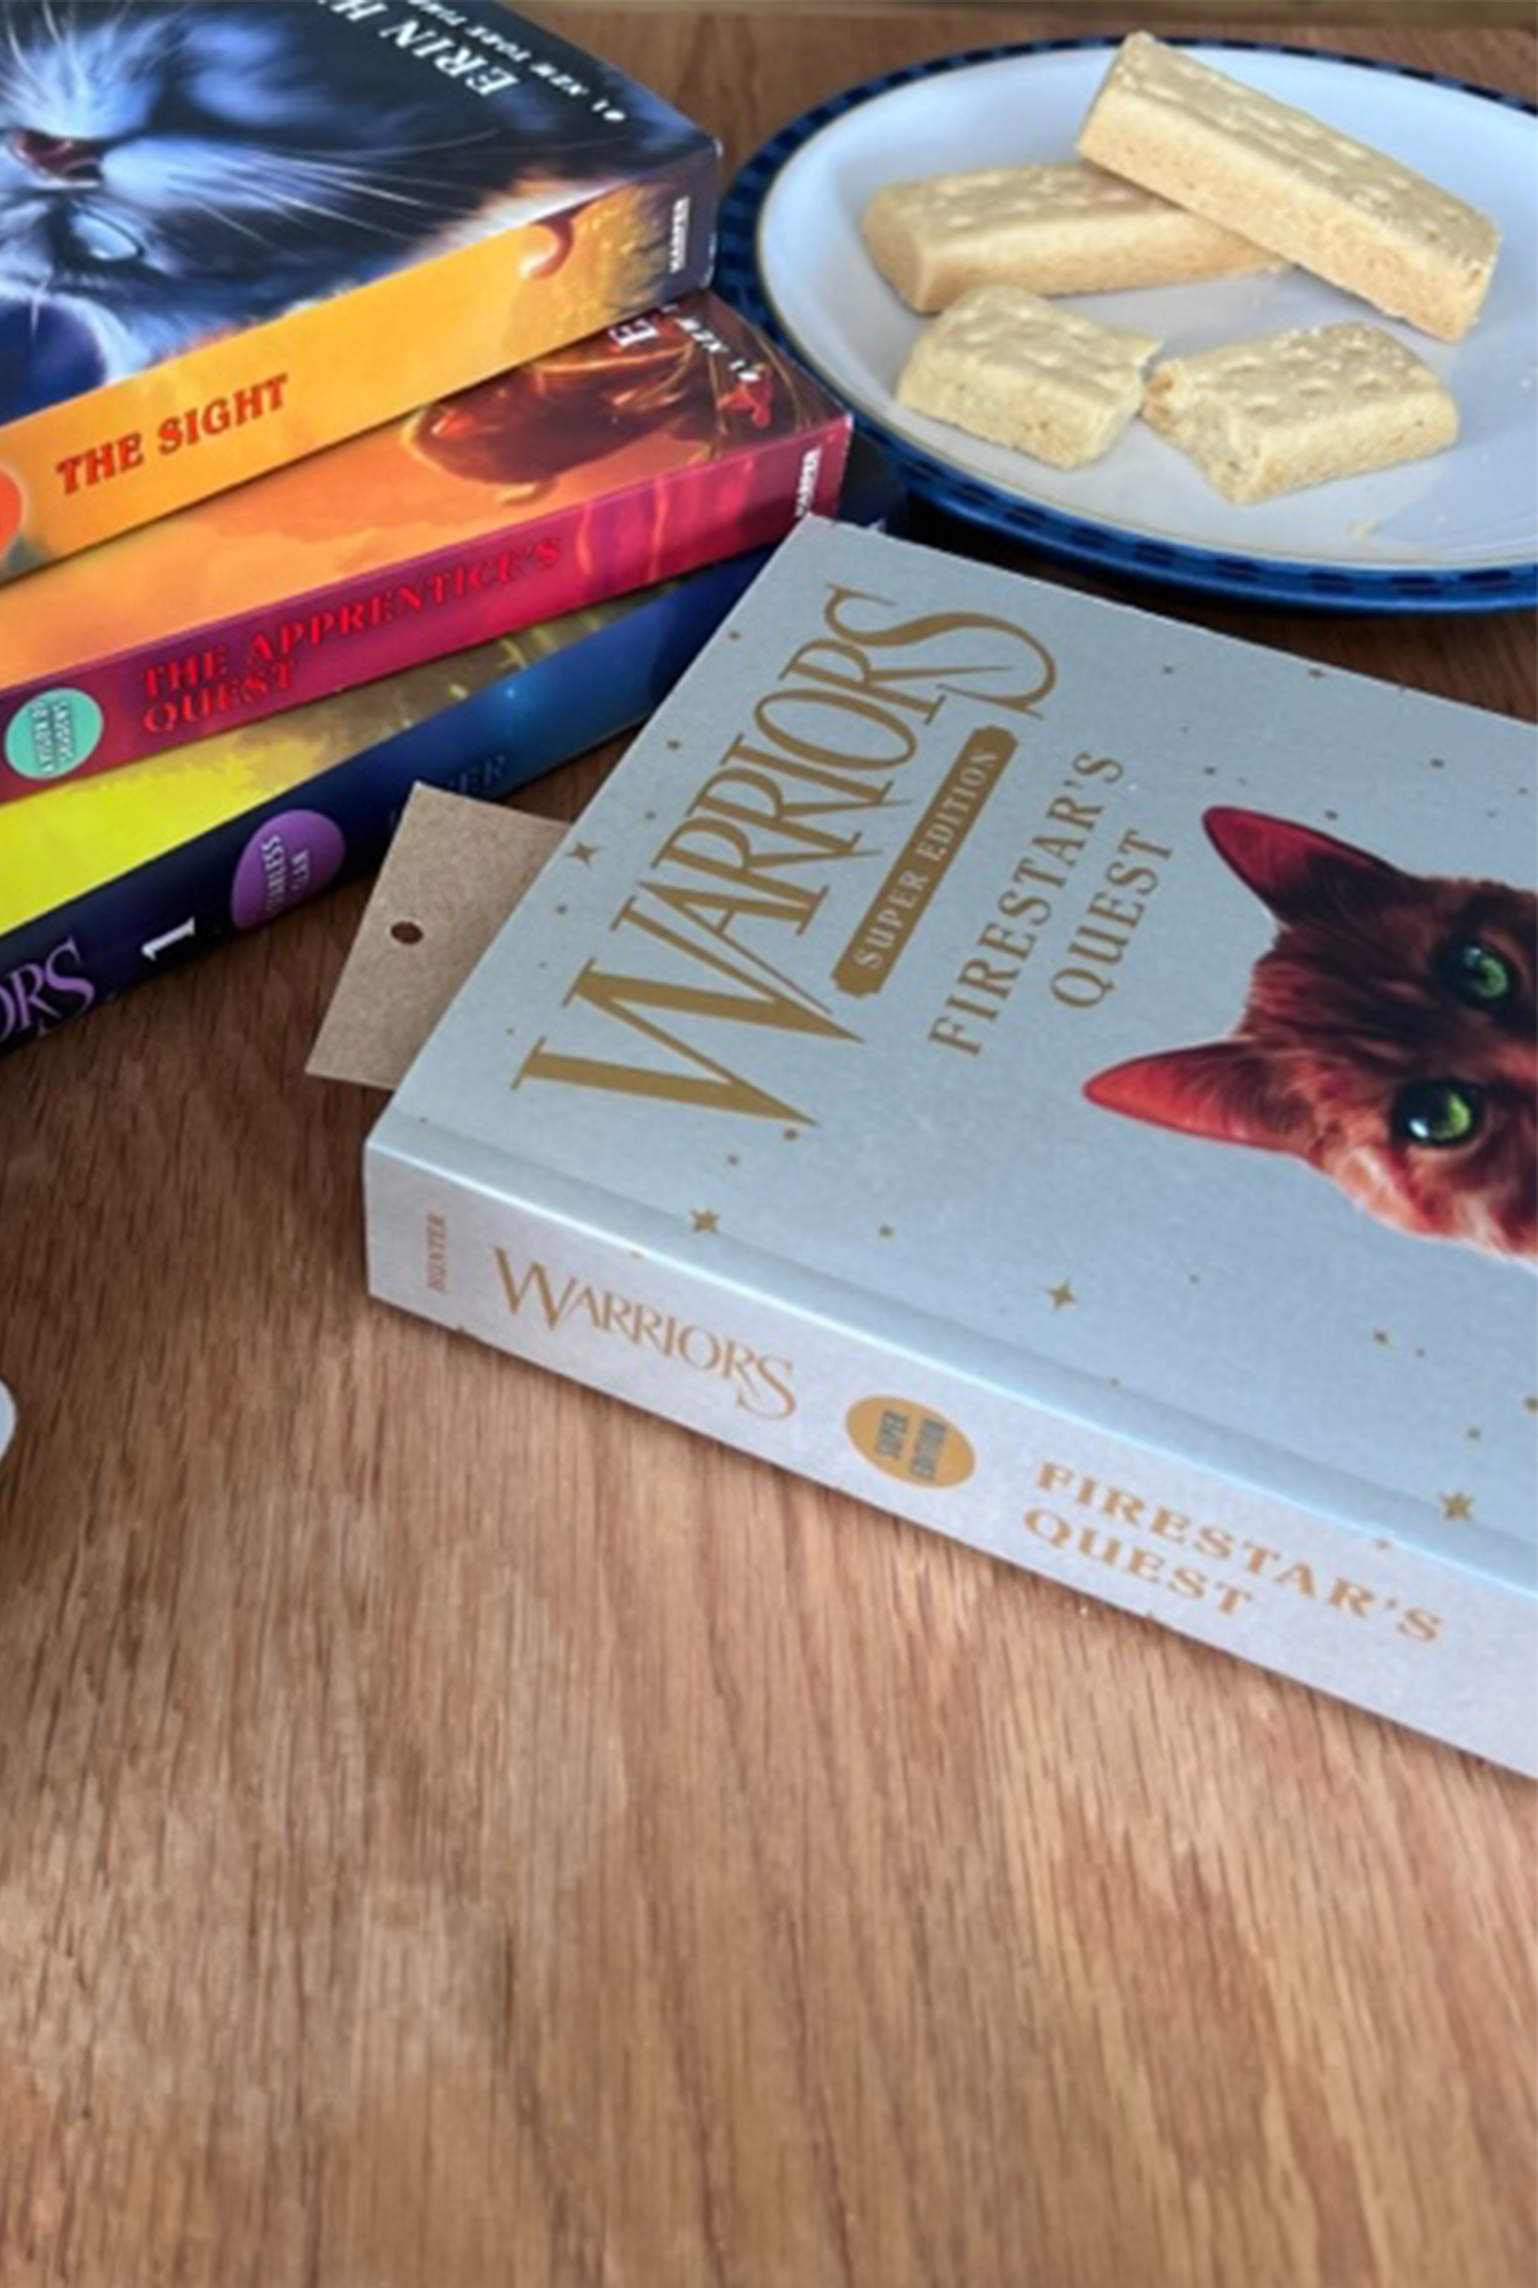 Warrior Cats books - Books - Port Orchard, Washington